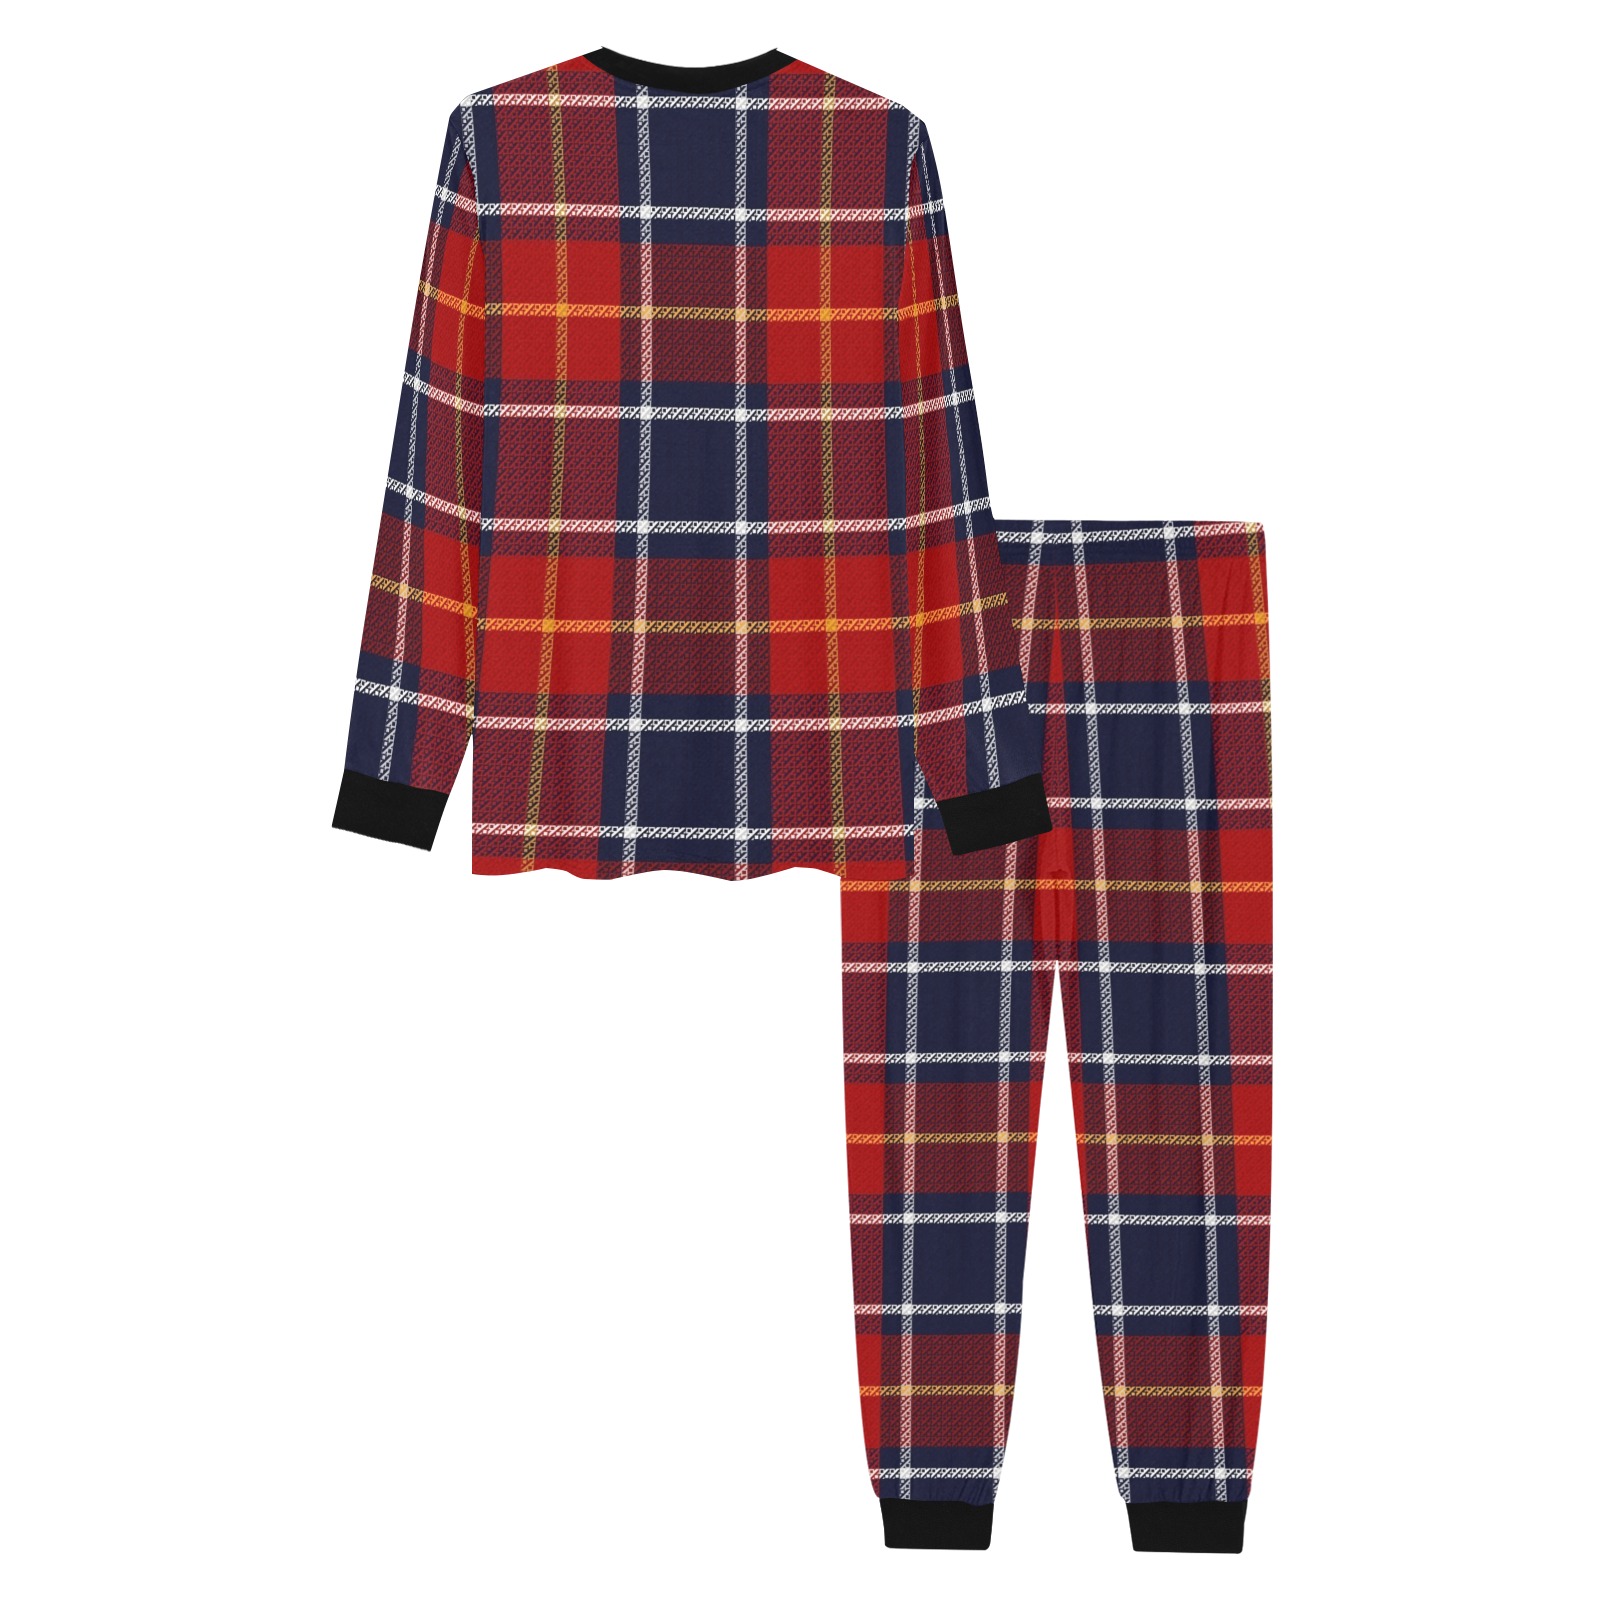 Red Tartan Plaid Men's All Over Print Pajama Set